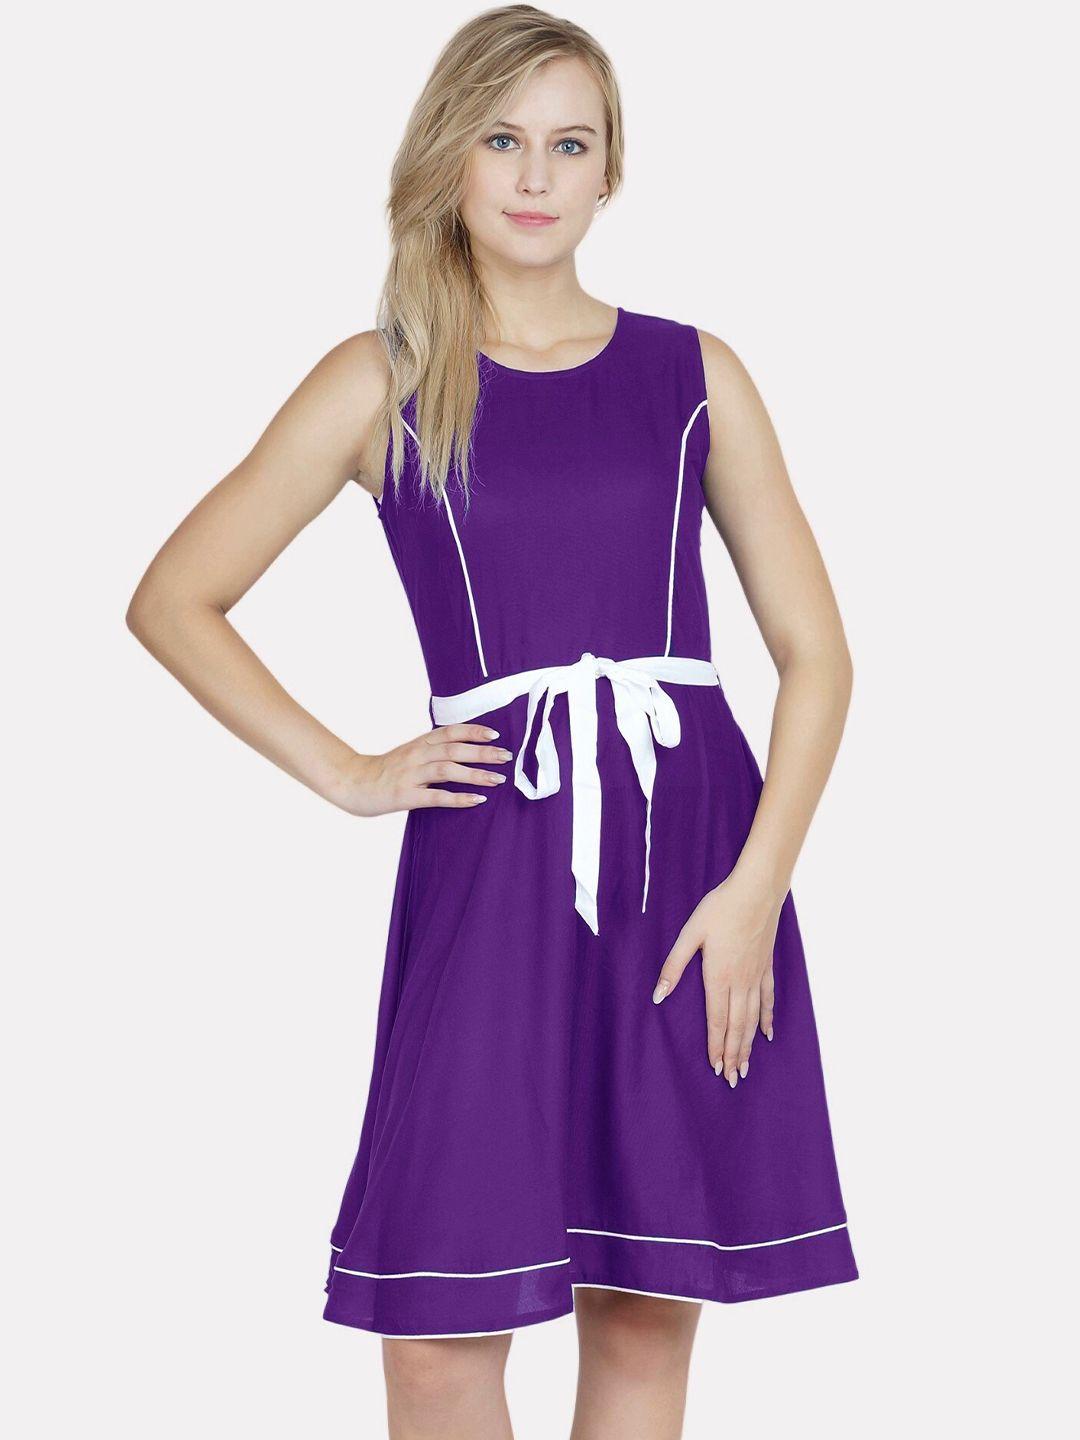 patrorna-sleeveless-cotton-a-line-dress